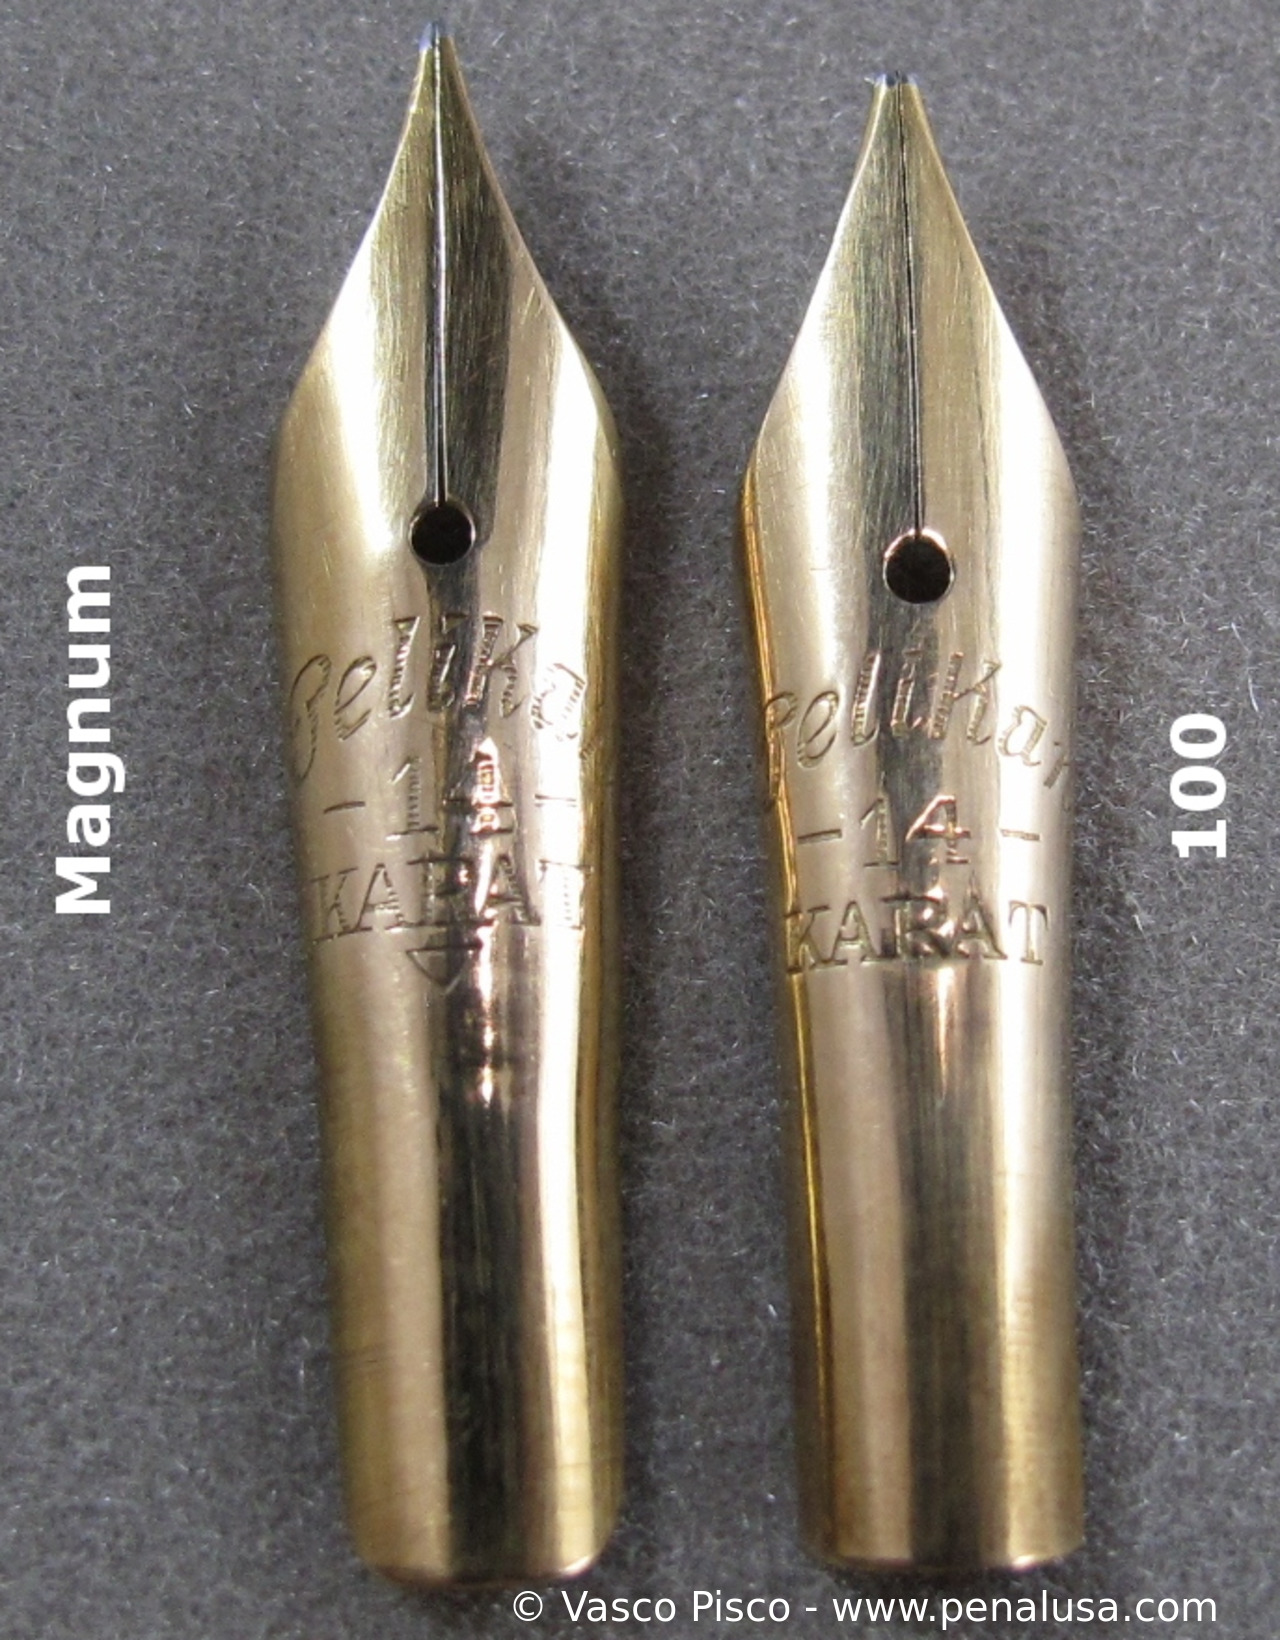 Nib comparison Pelikan Magnum vs. Pelikan 100